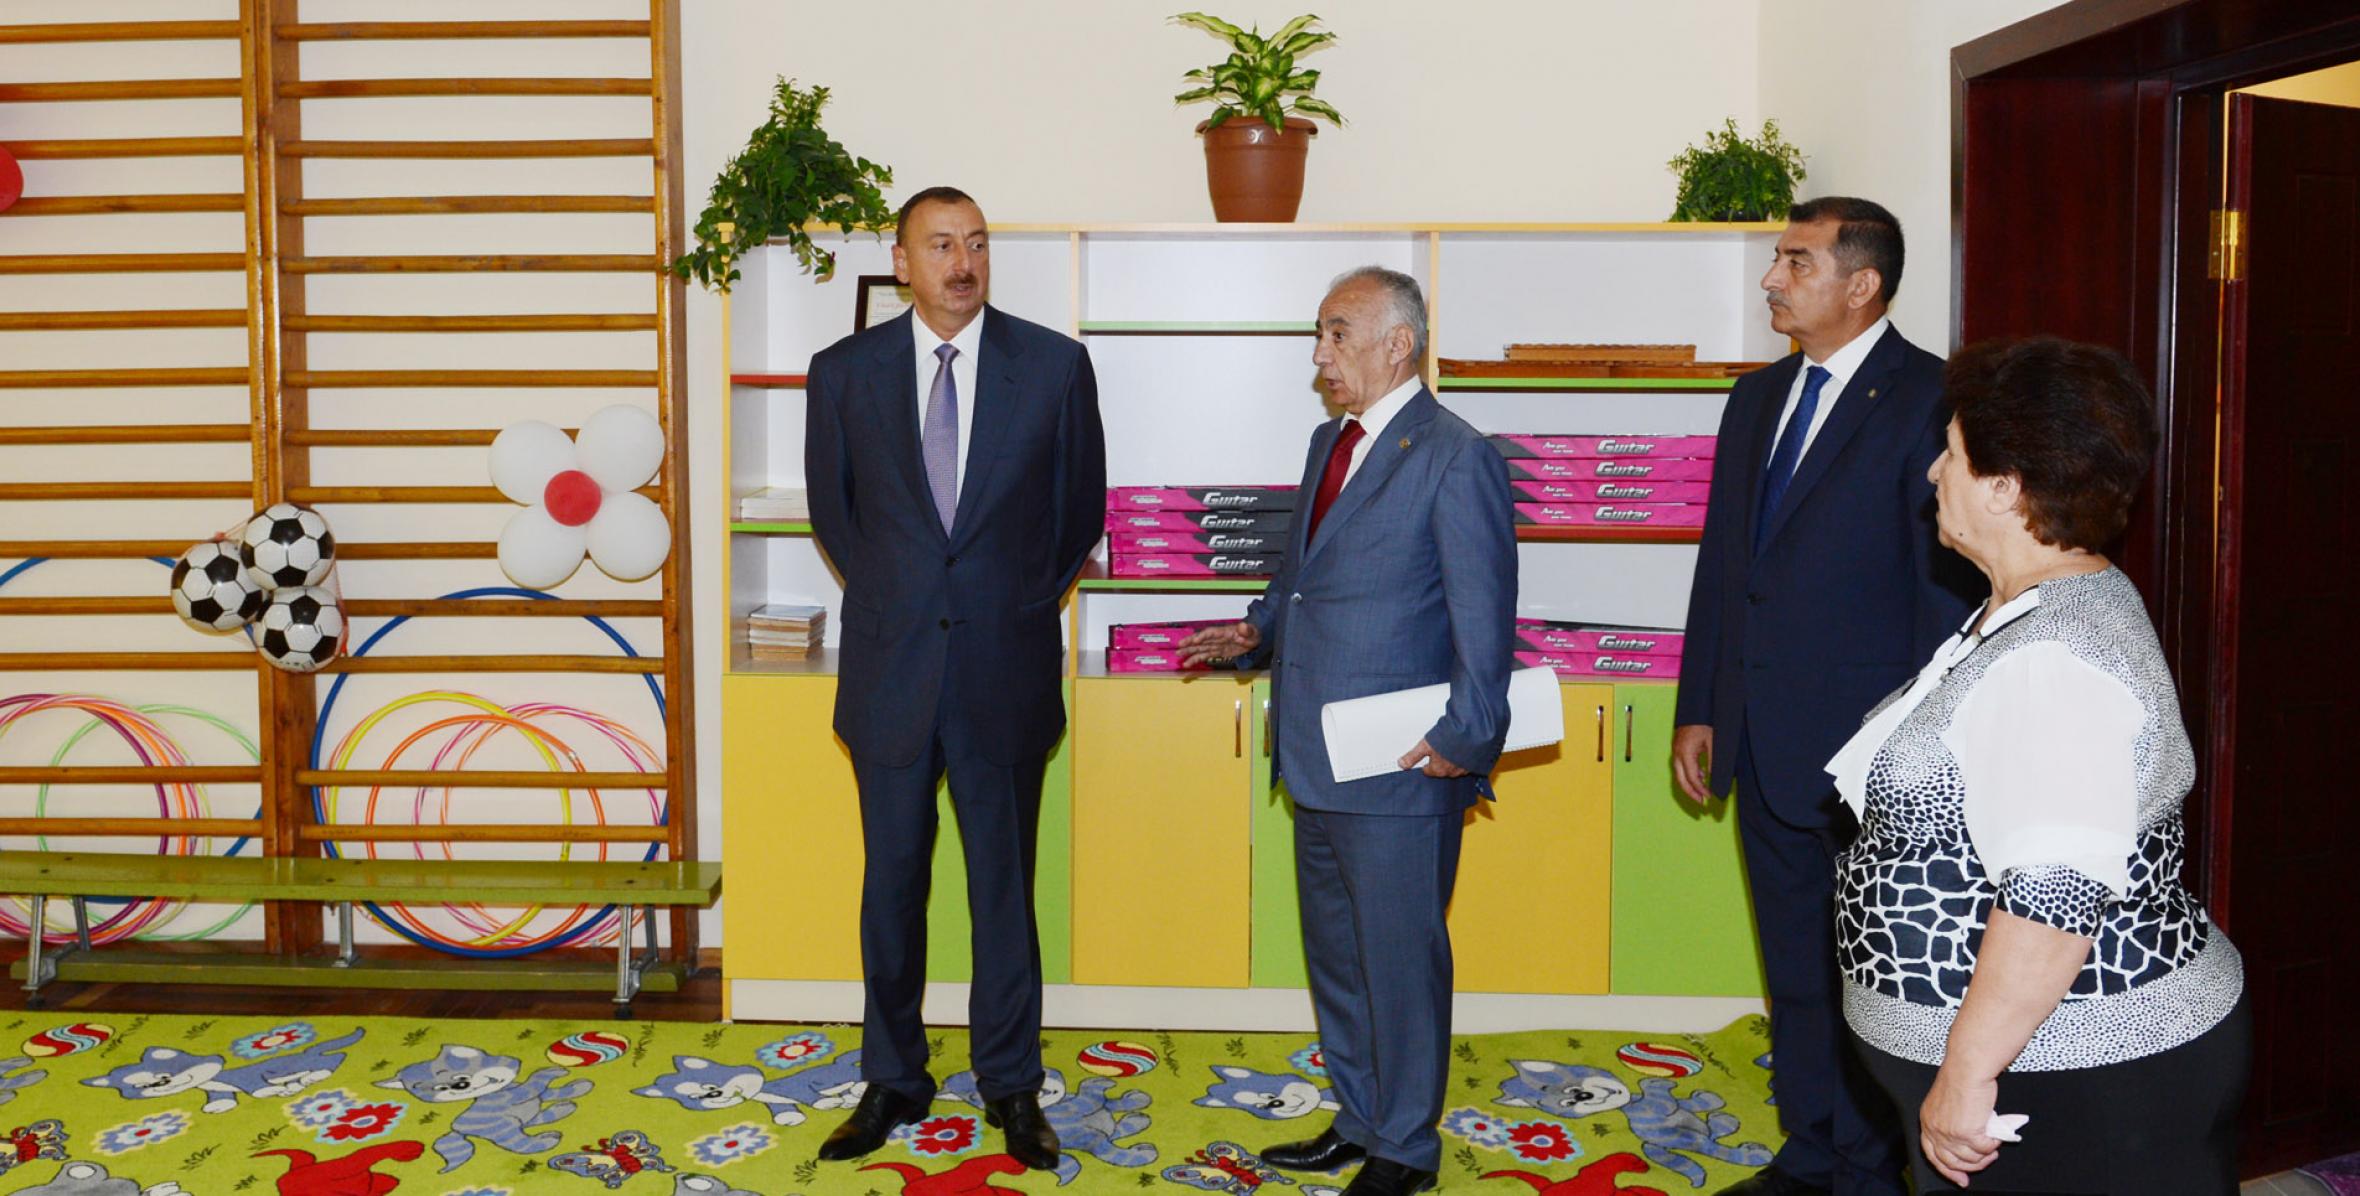 Ilham Aliyev reviewed nursery-kindergarten No 268 in the Bulbula settlement of Baku after reconstruction